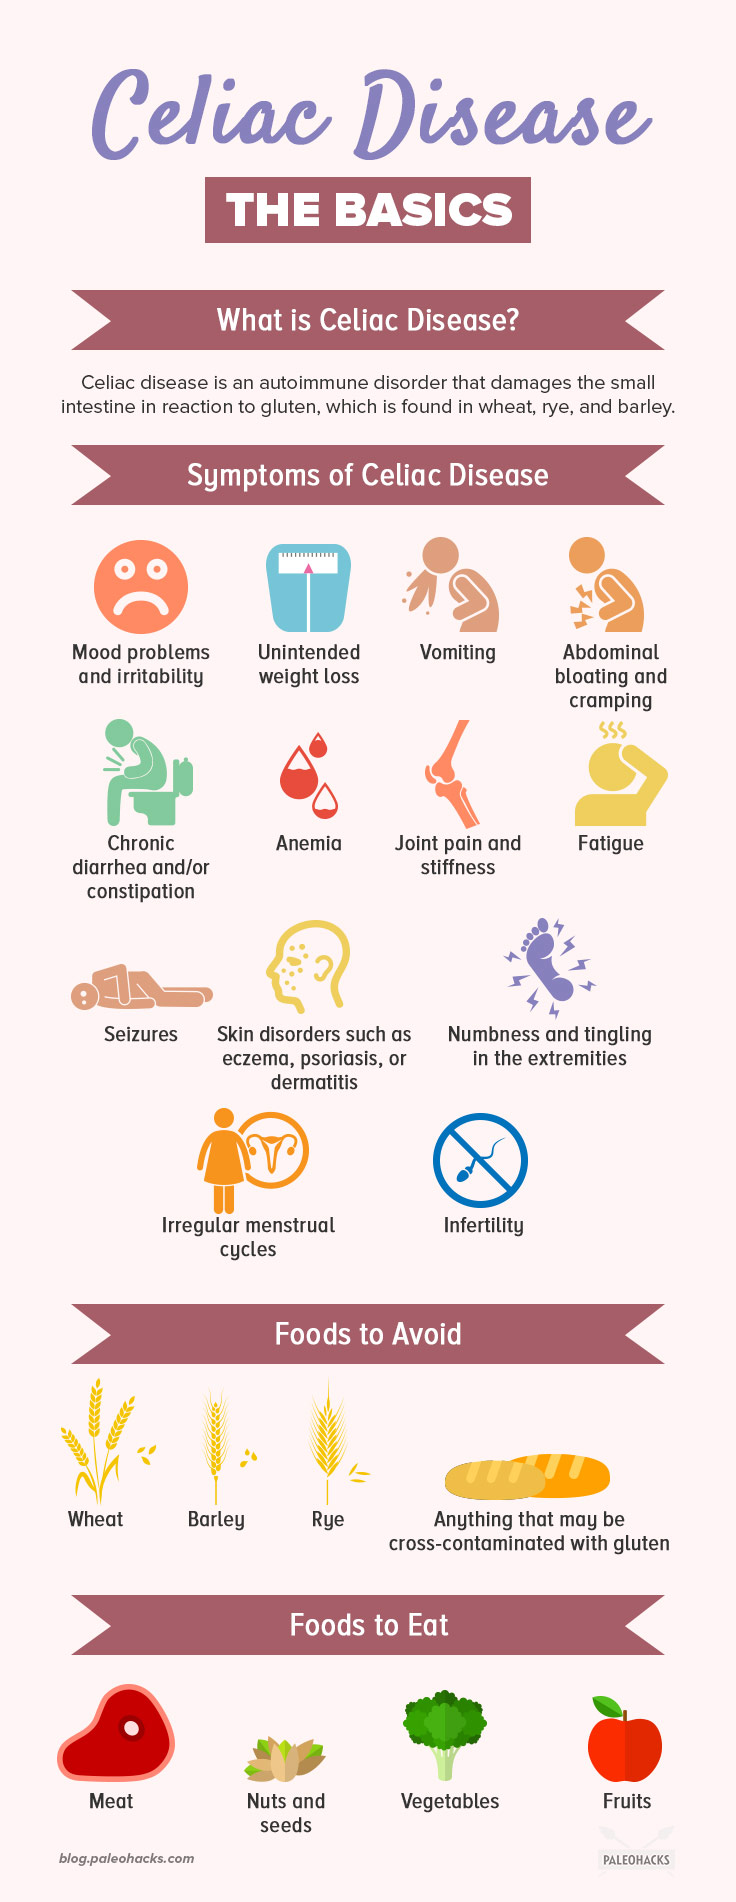 Symptoms of Celiac Disease + Toxic Foods to Avoid | PaleoHacks